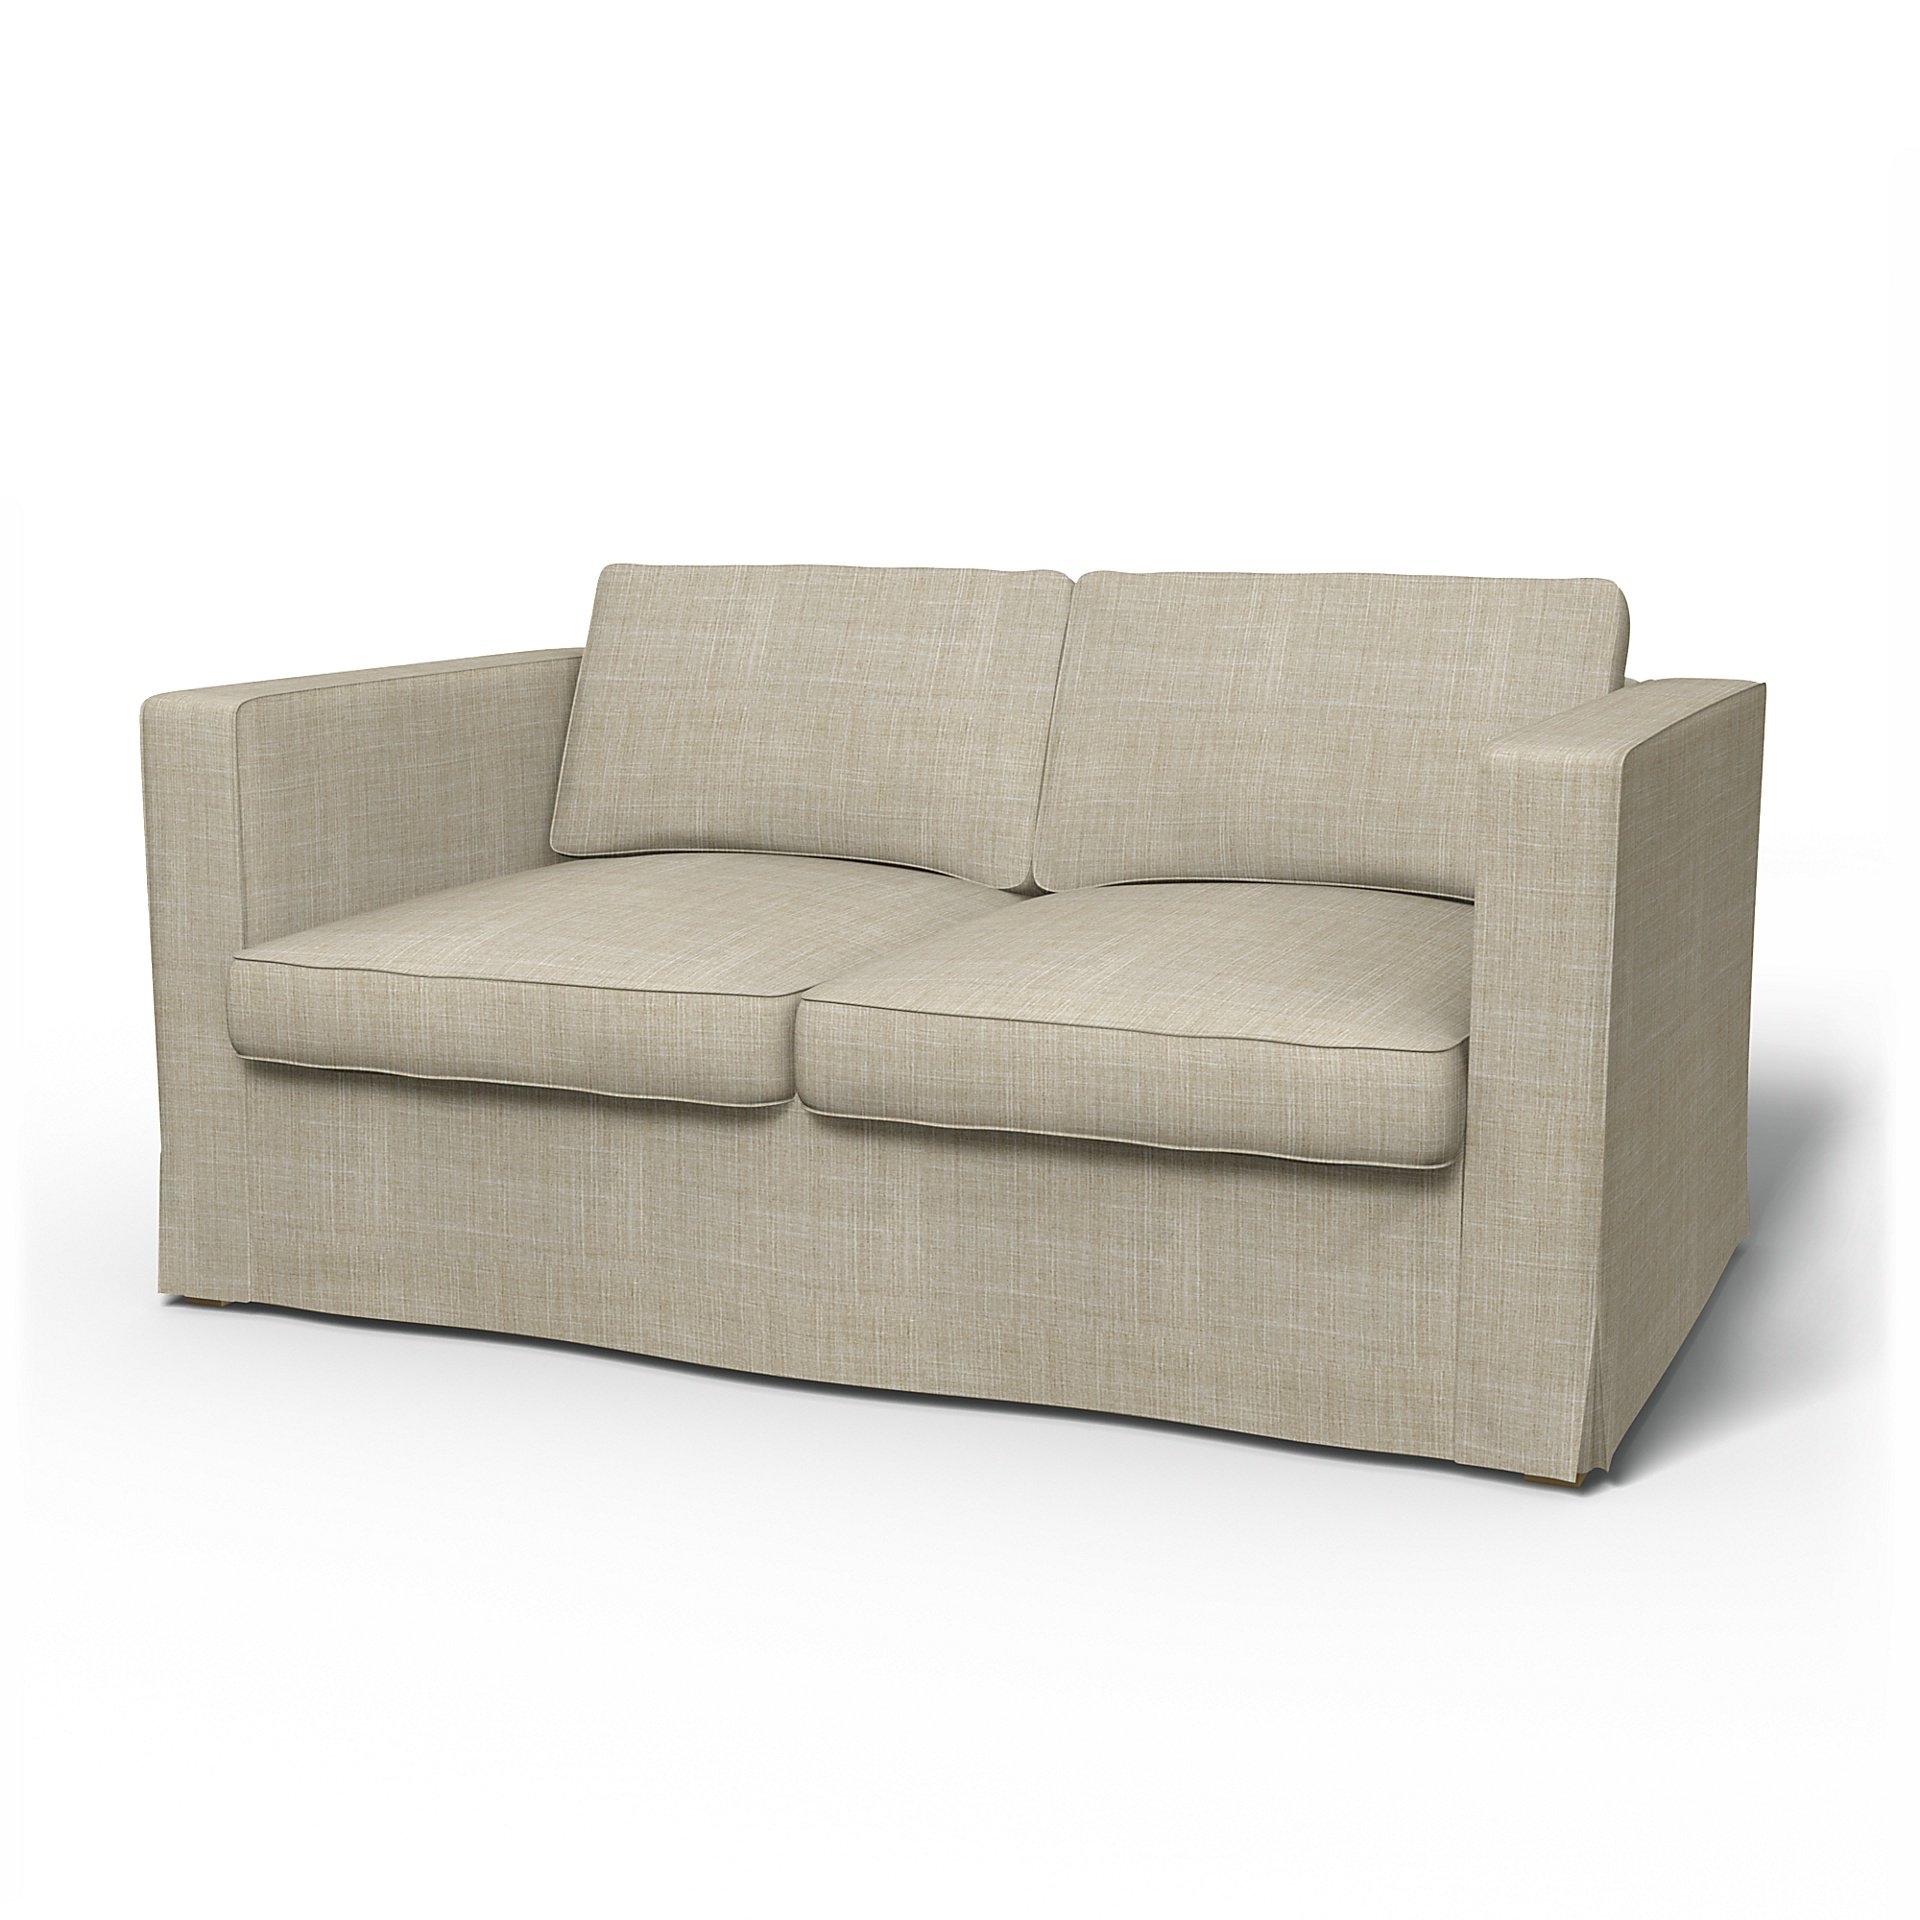 IKEA - Karlanda 2 Seater Sofa Cover, Sand Beige, Boucle & Texture - Bemz